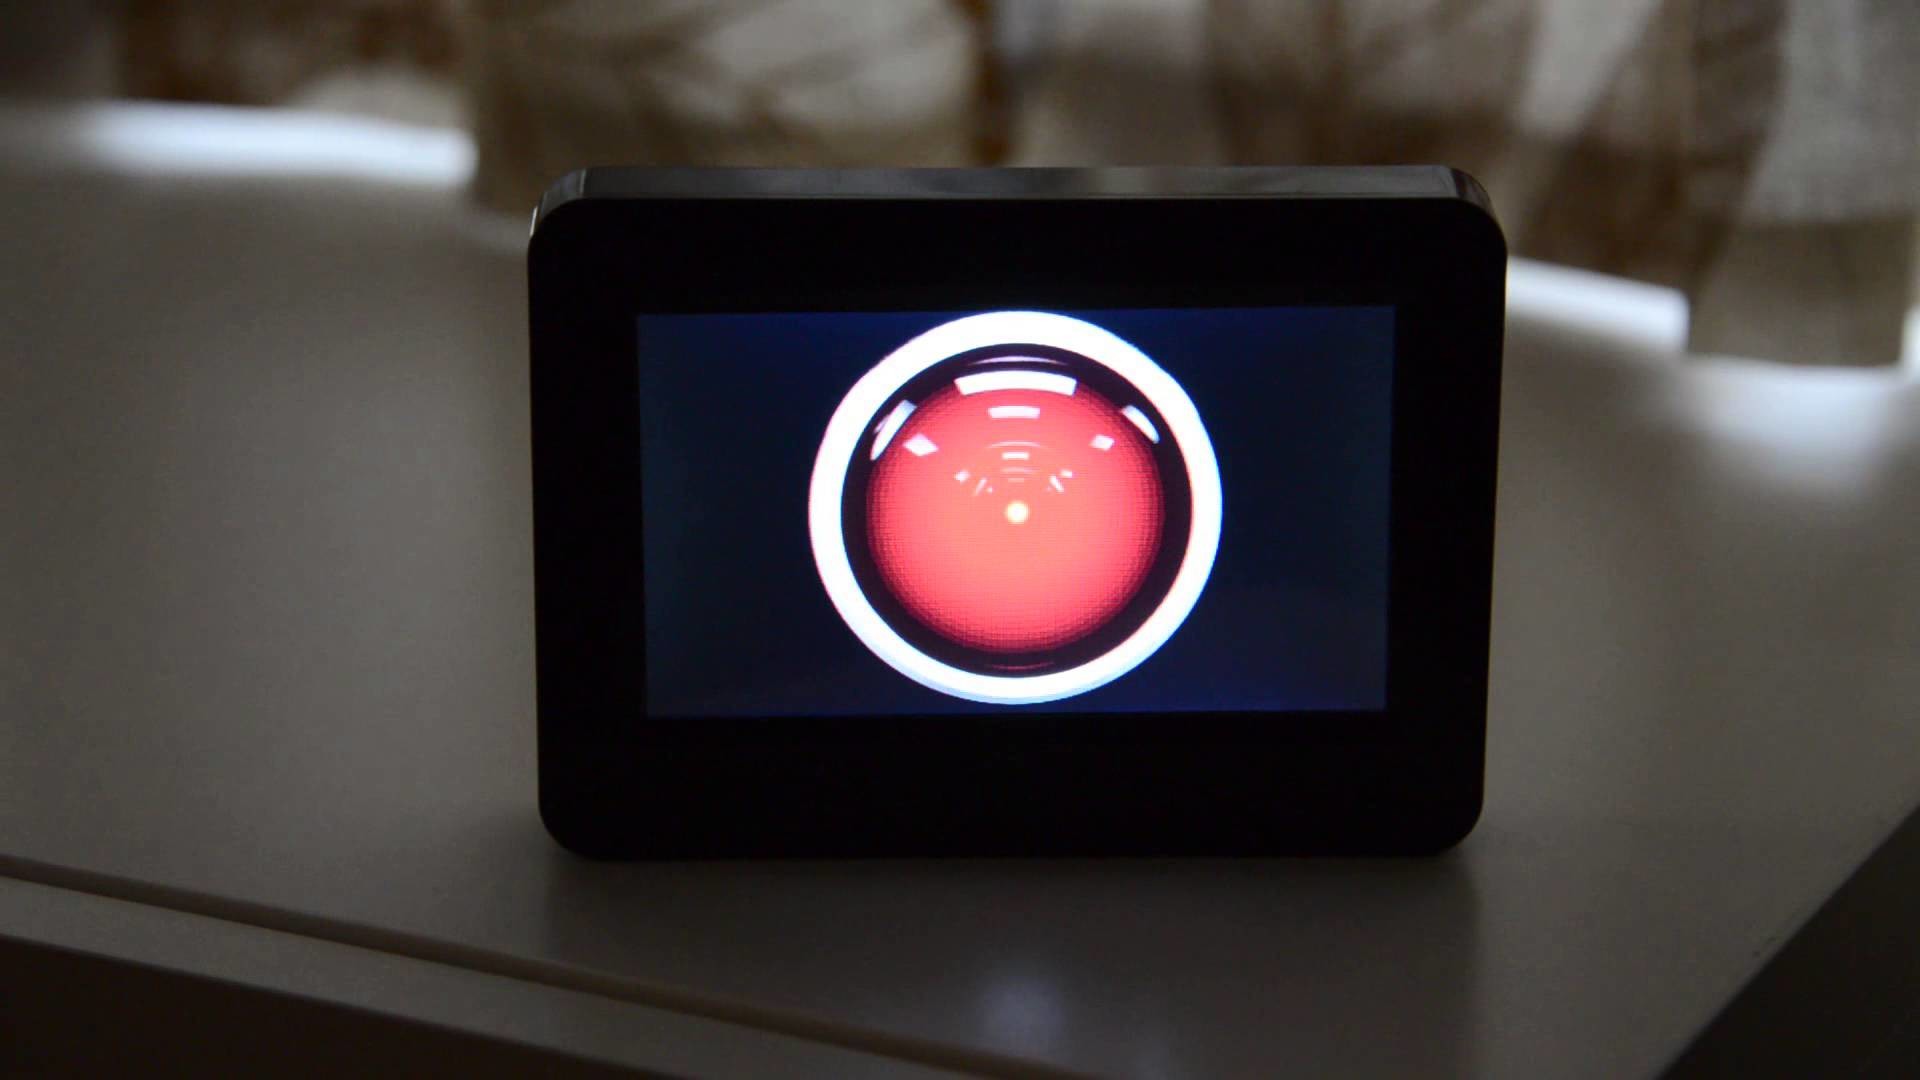 HAL 9000 – The Alarm Clock!